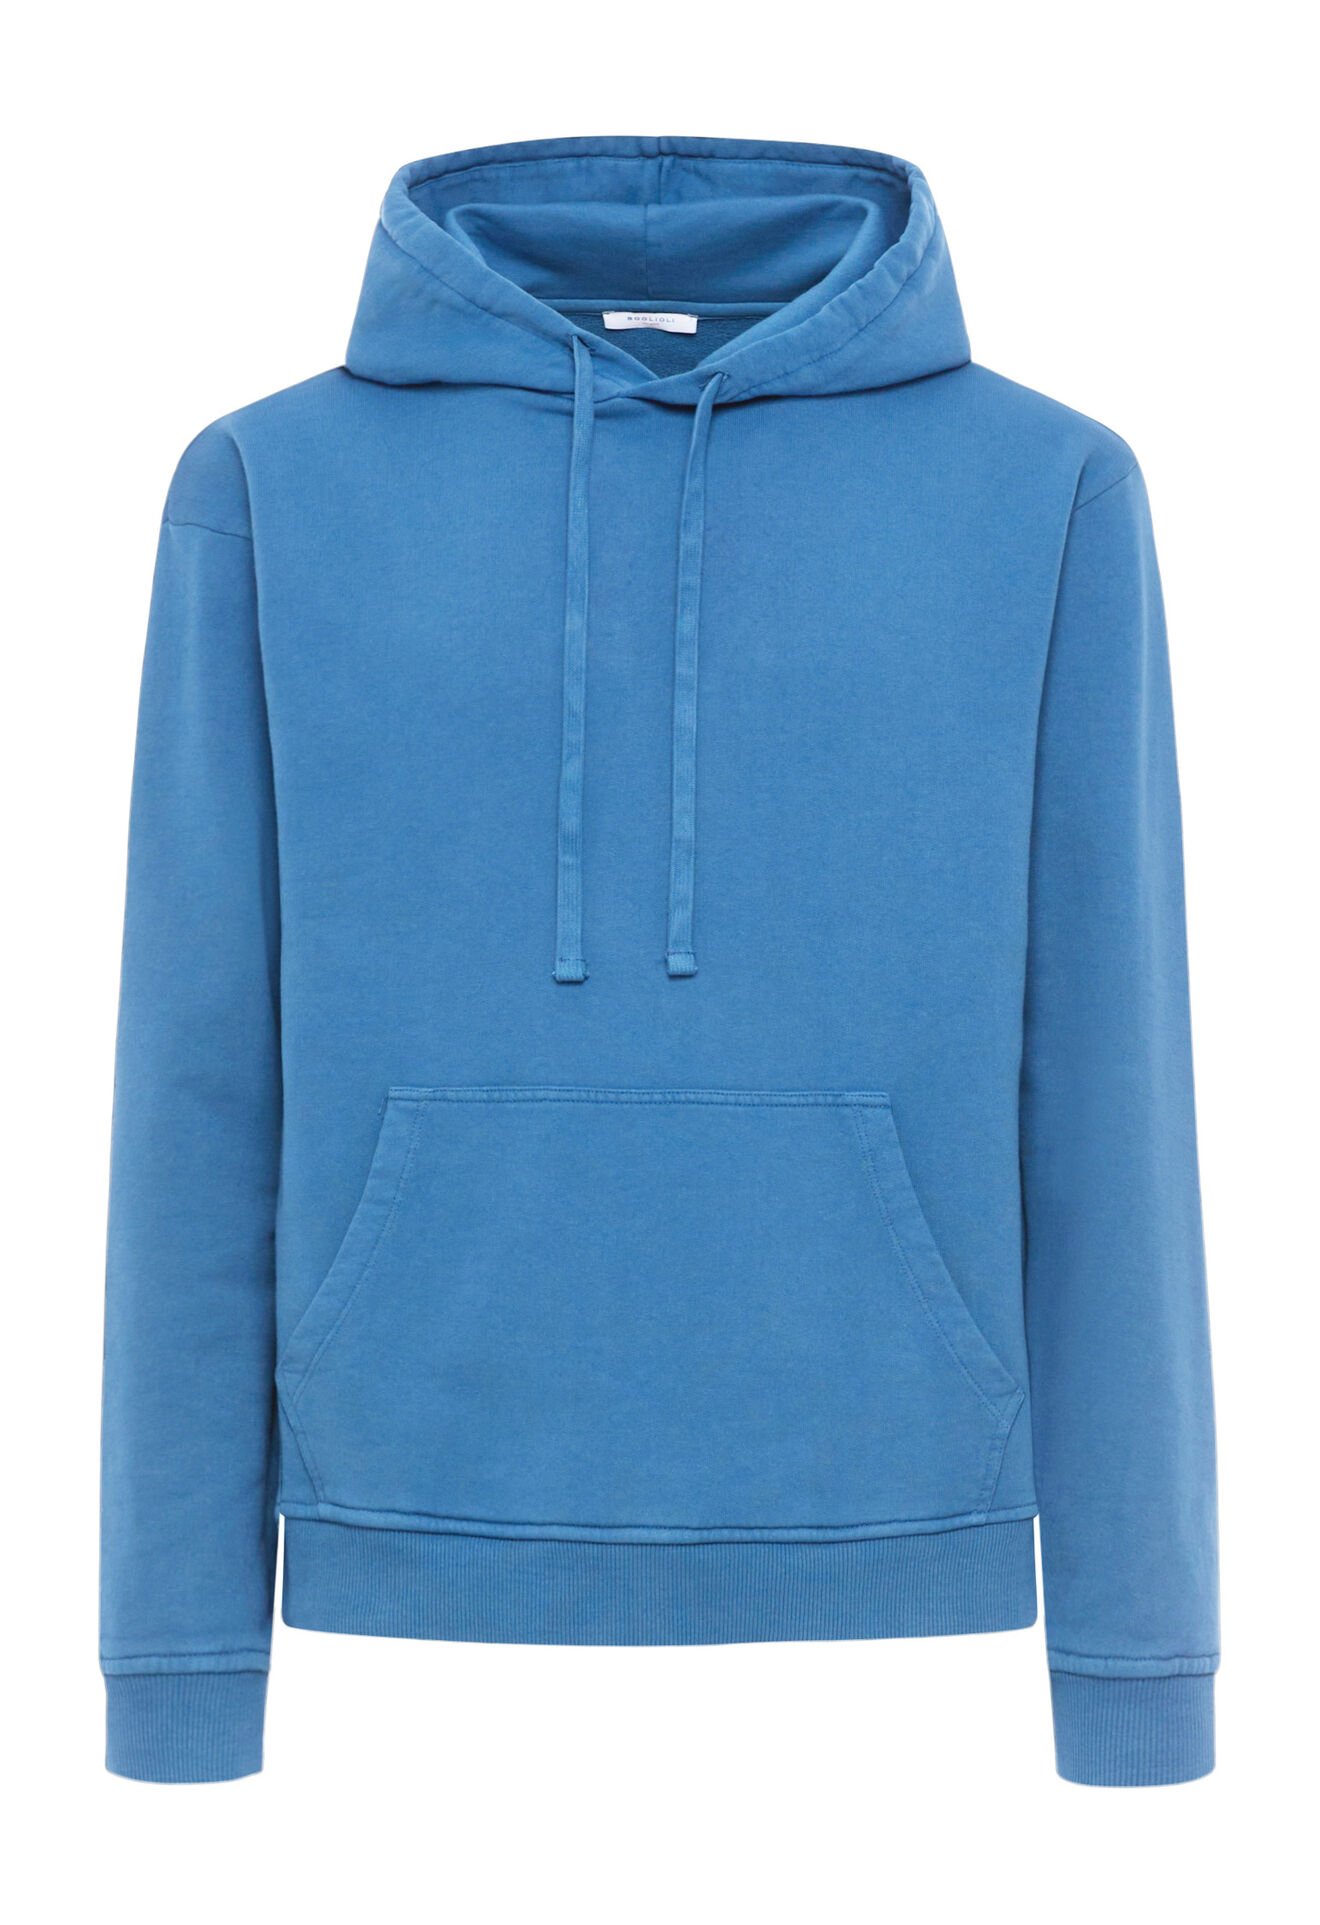 hoodie bleu ciel